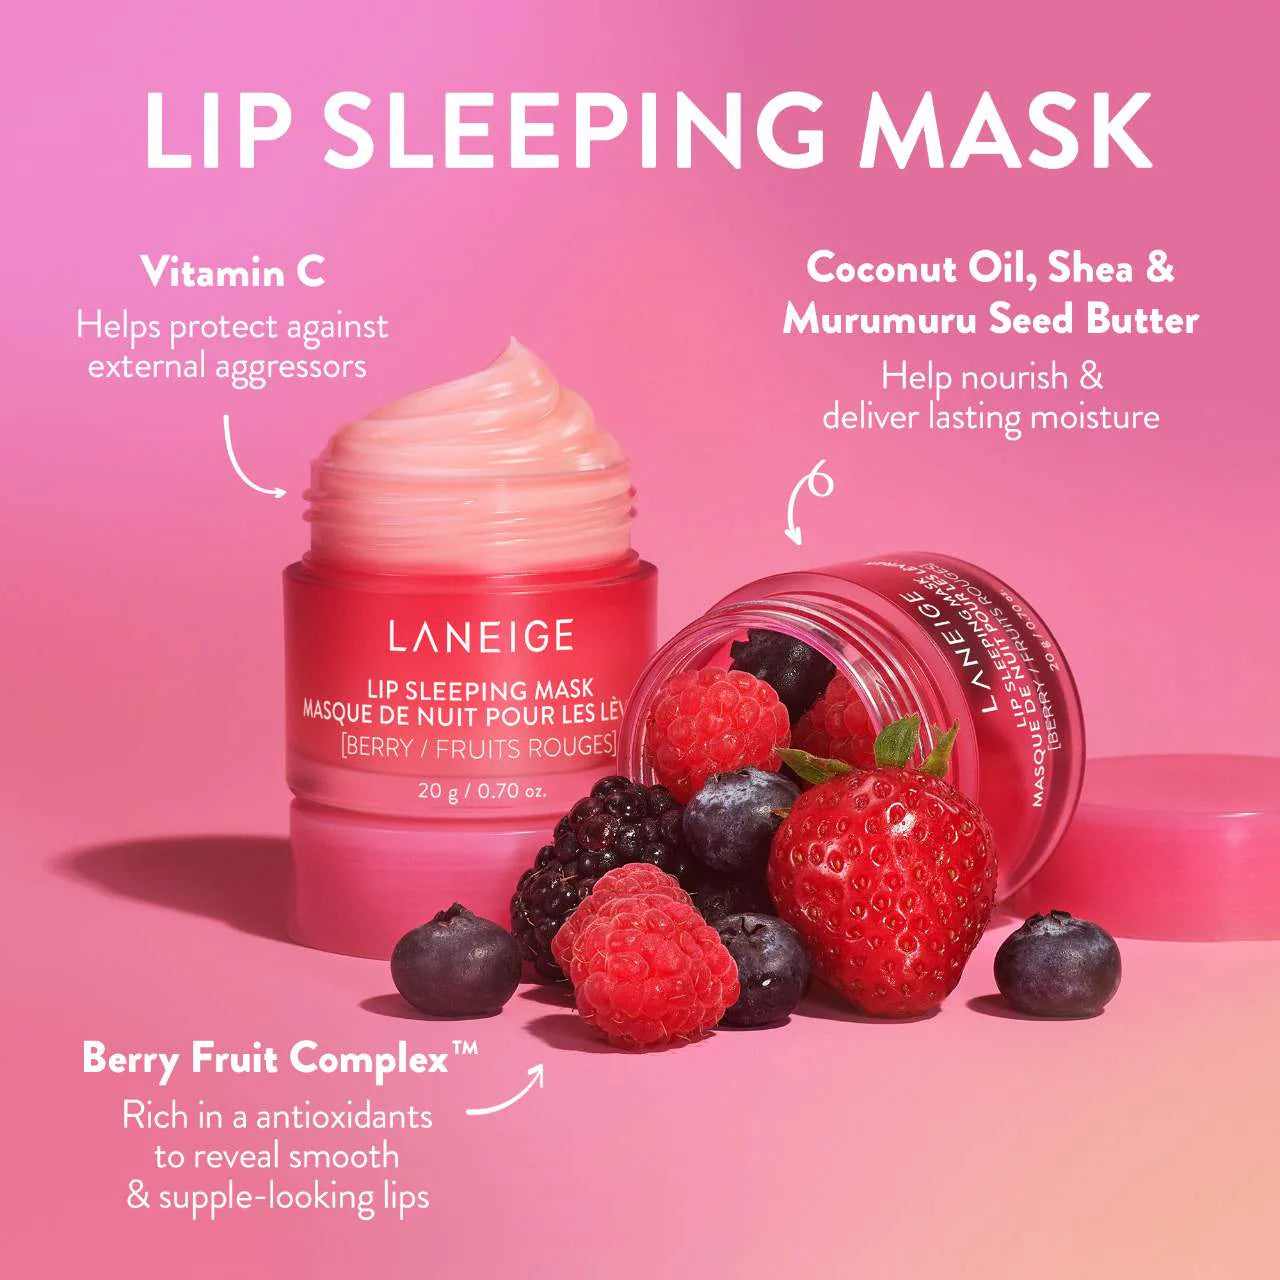 Lip Sleeping Mask Intense Hydration with Vitamin C, Berry